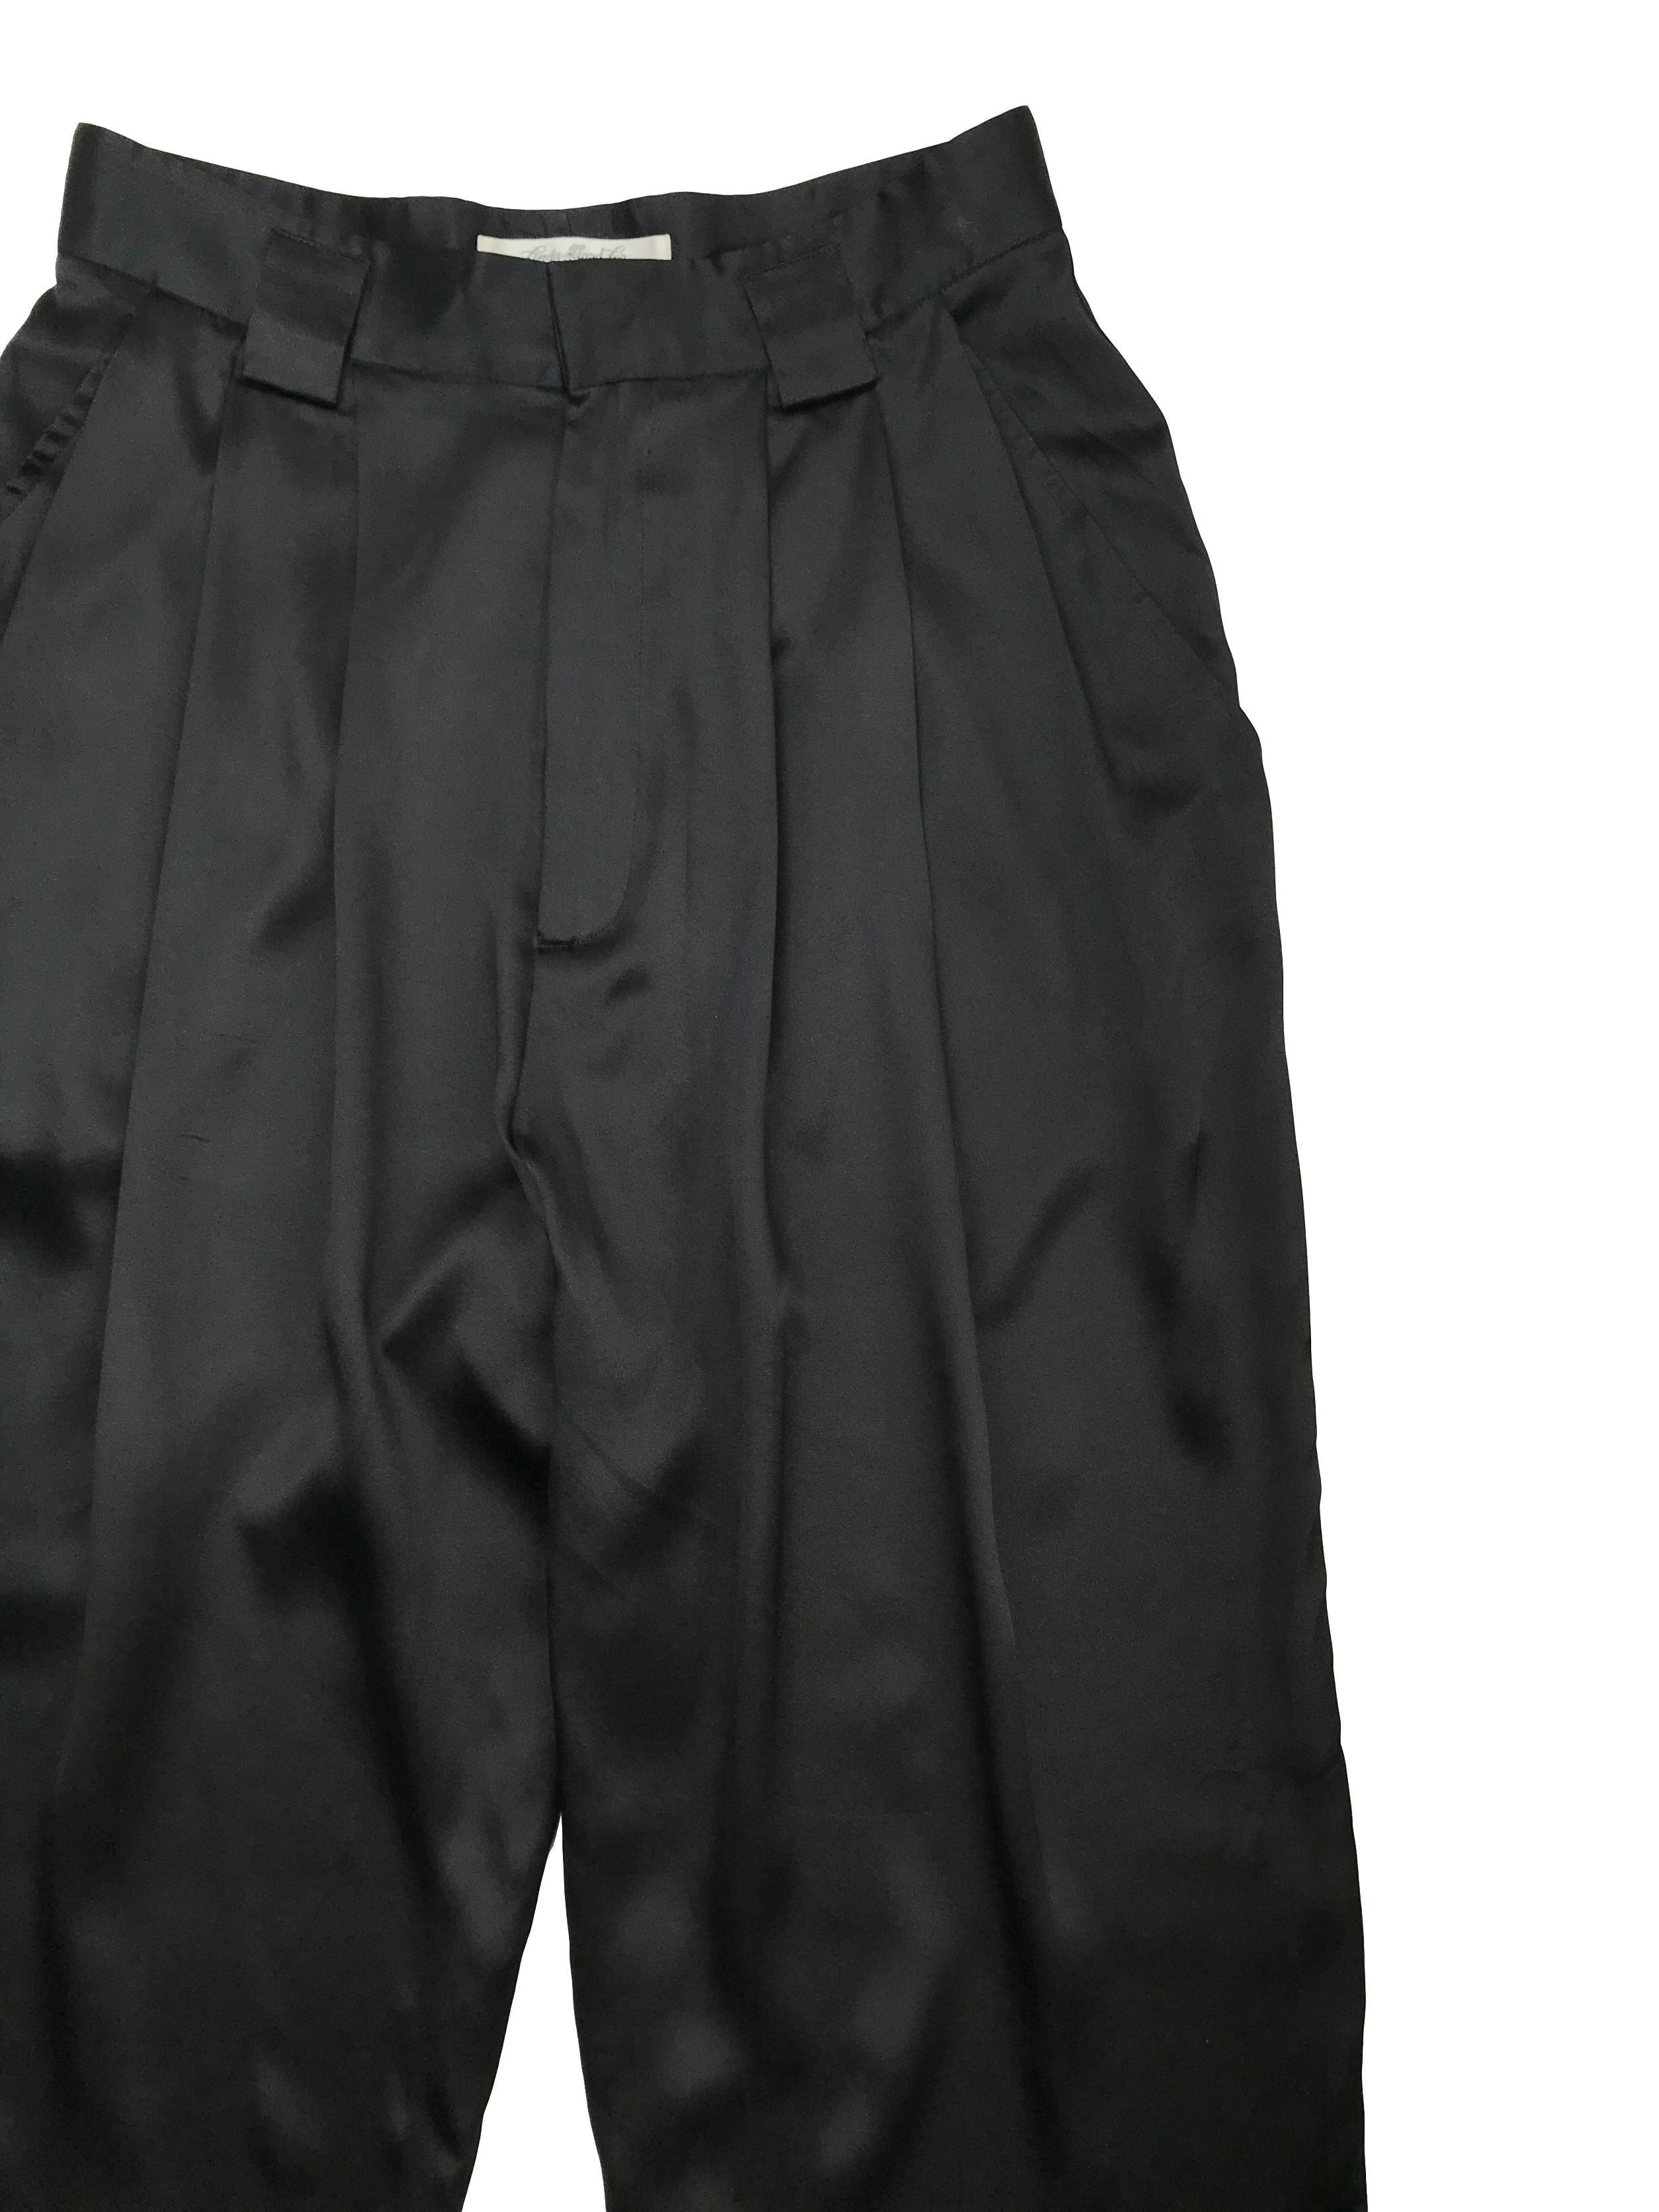 Pantalón slouchy Linda Allard for Ellen Tracy 100% seda negra. Cintura  66cm Largo 110cm (para adaptar a tu alruta)